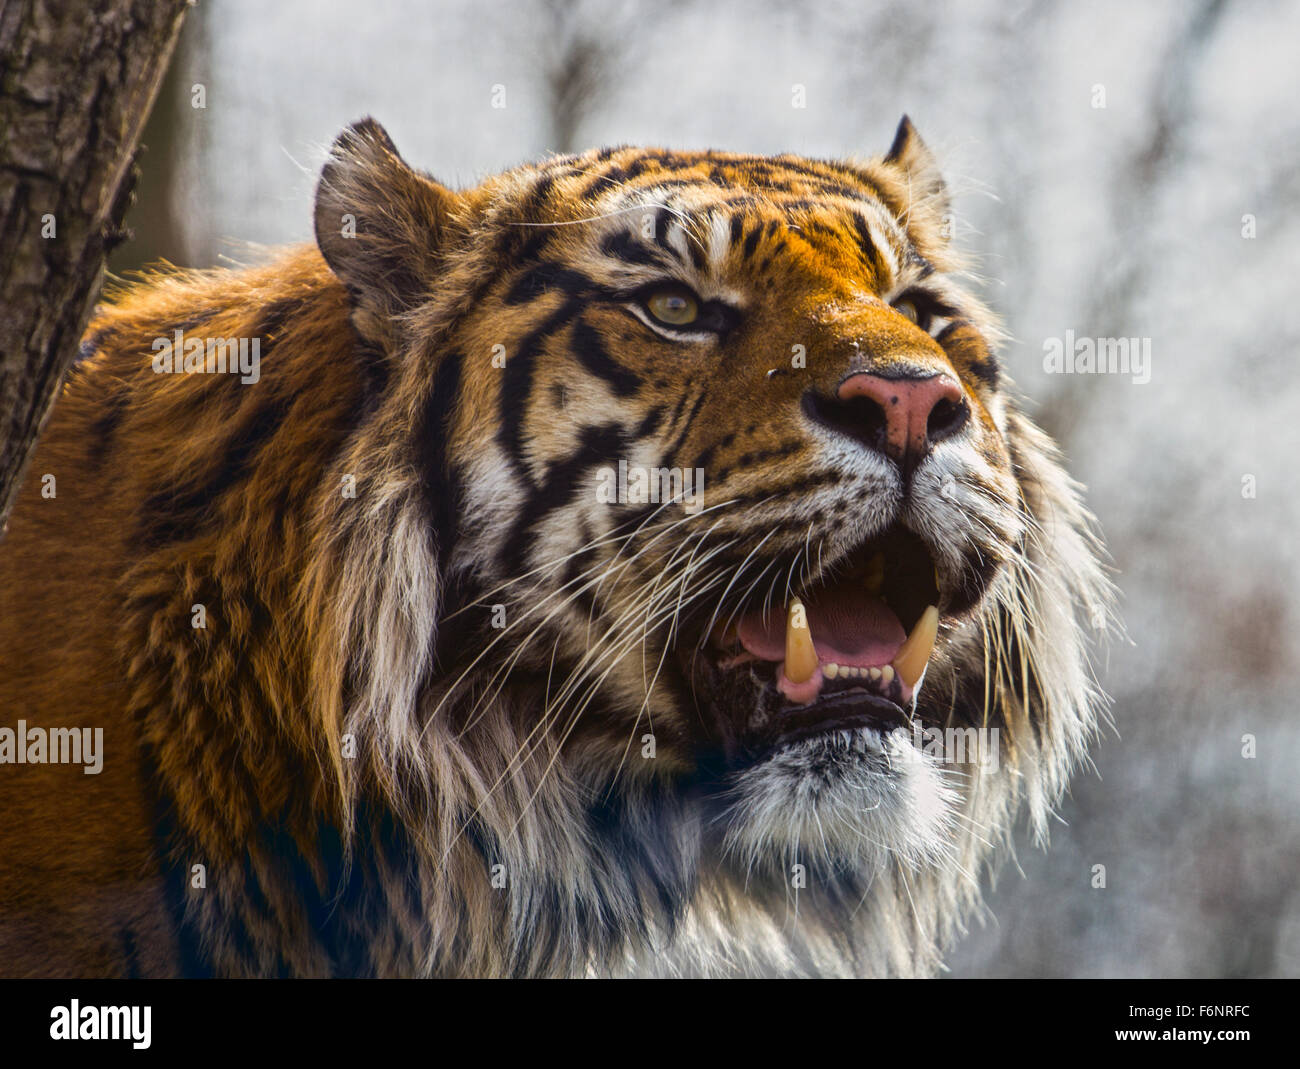 Tiger in zsl london zoo Foto Stock